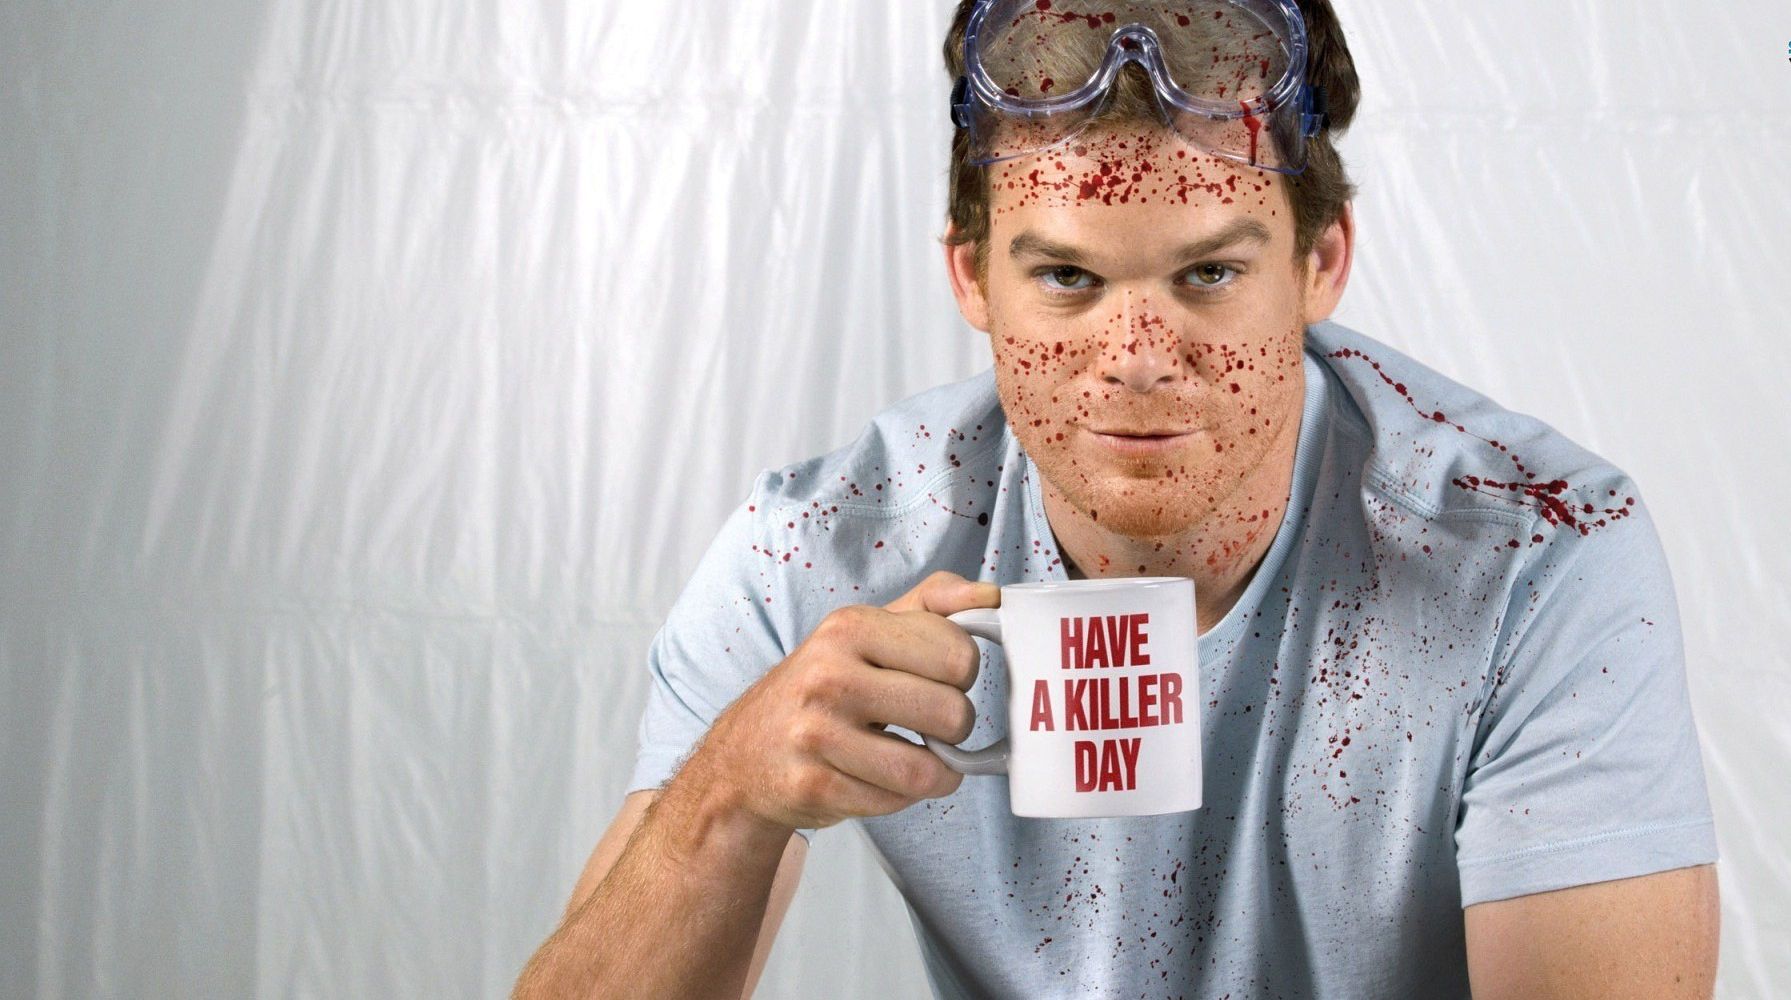 Dexter - Most Violent TV Shows